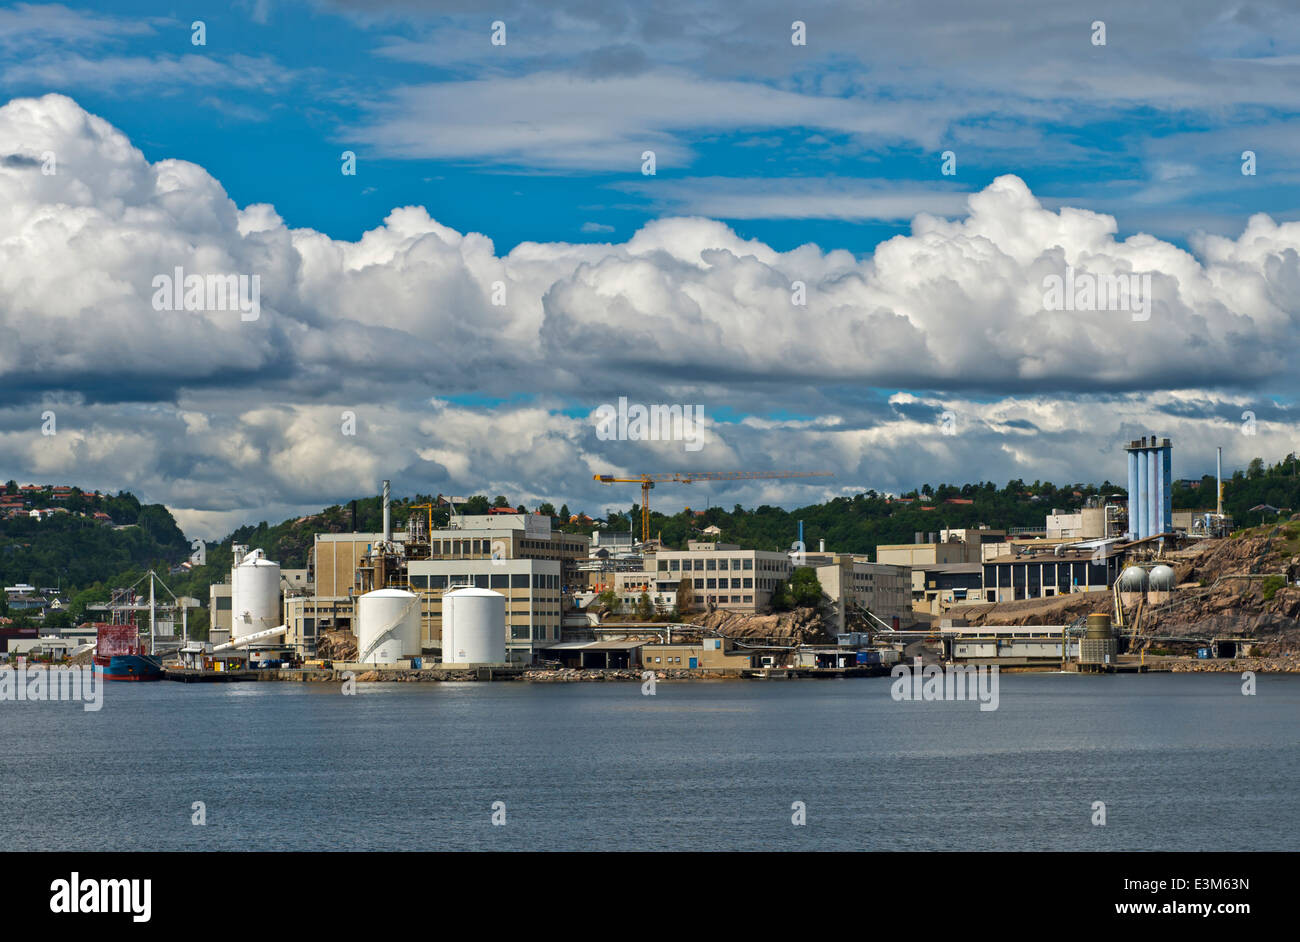 Industrial facilities of the nickel company Glencore Nikkelverk in the port city of Kristiansand, Norway Stock Photo